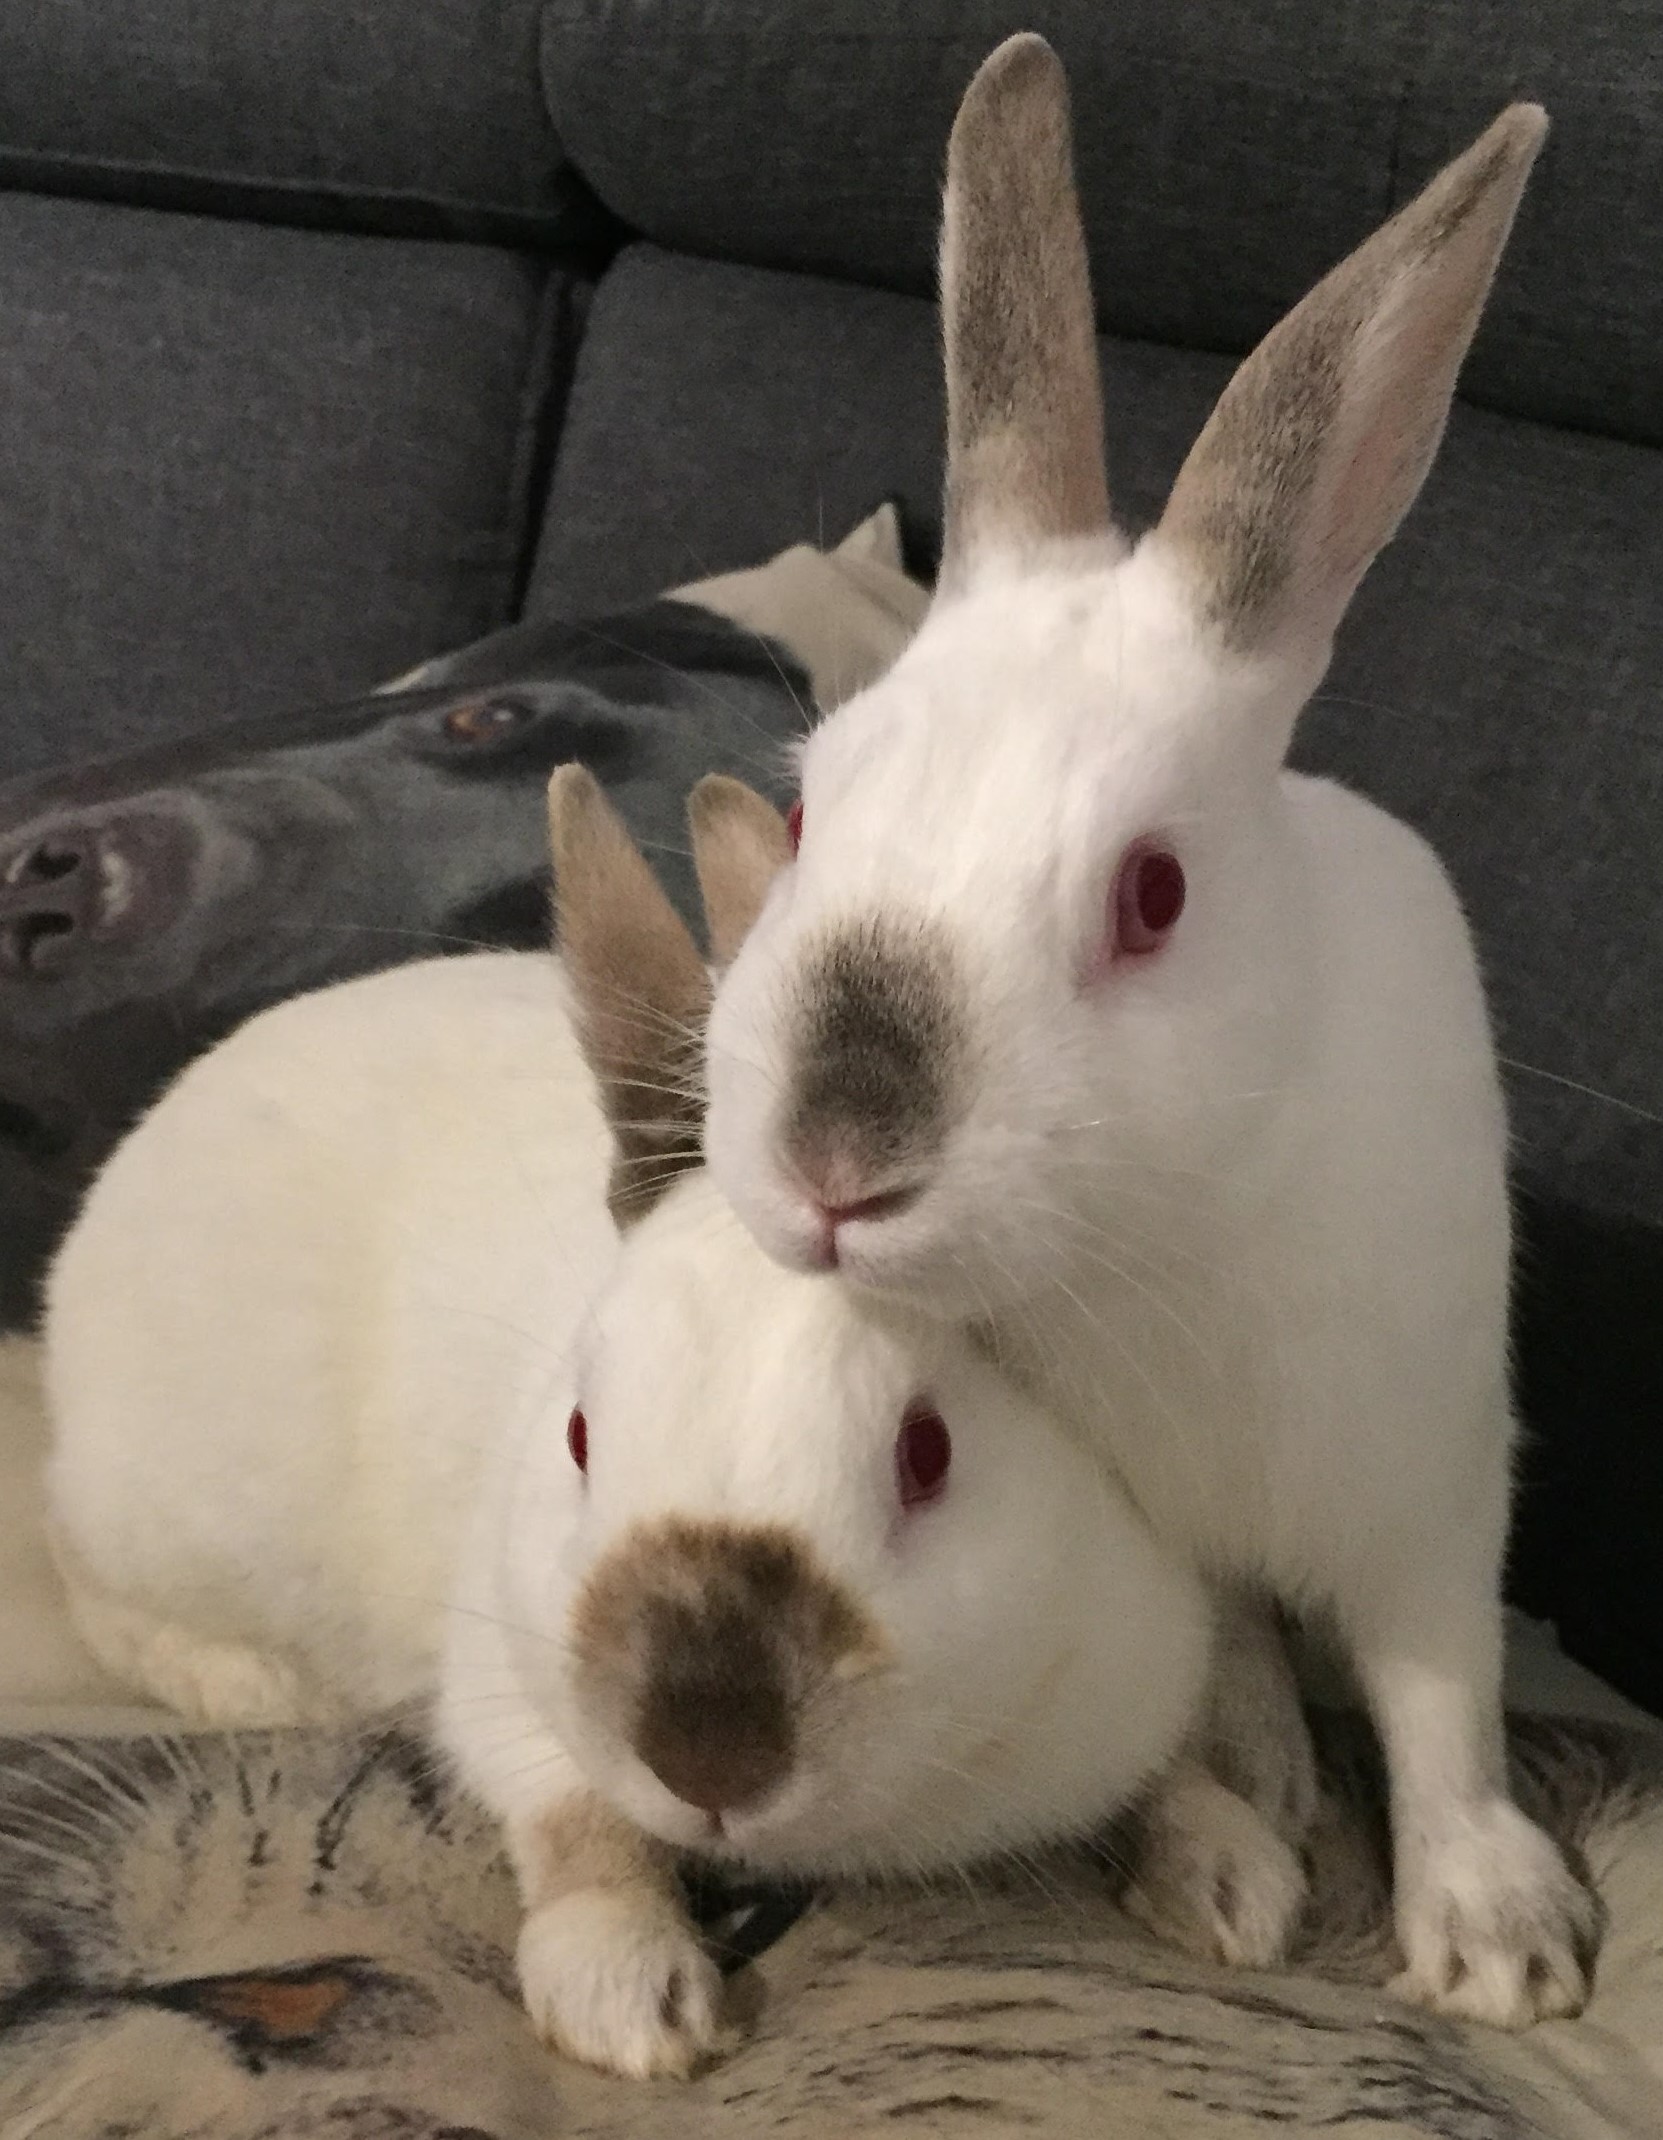 Rupert and Ramsey [Bonded Rabbits]